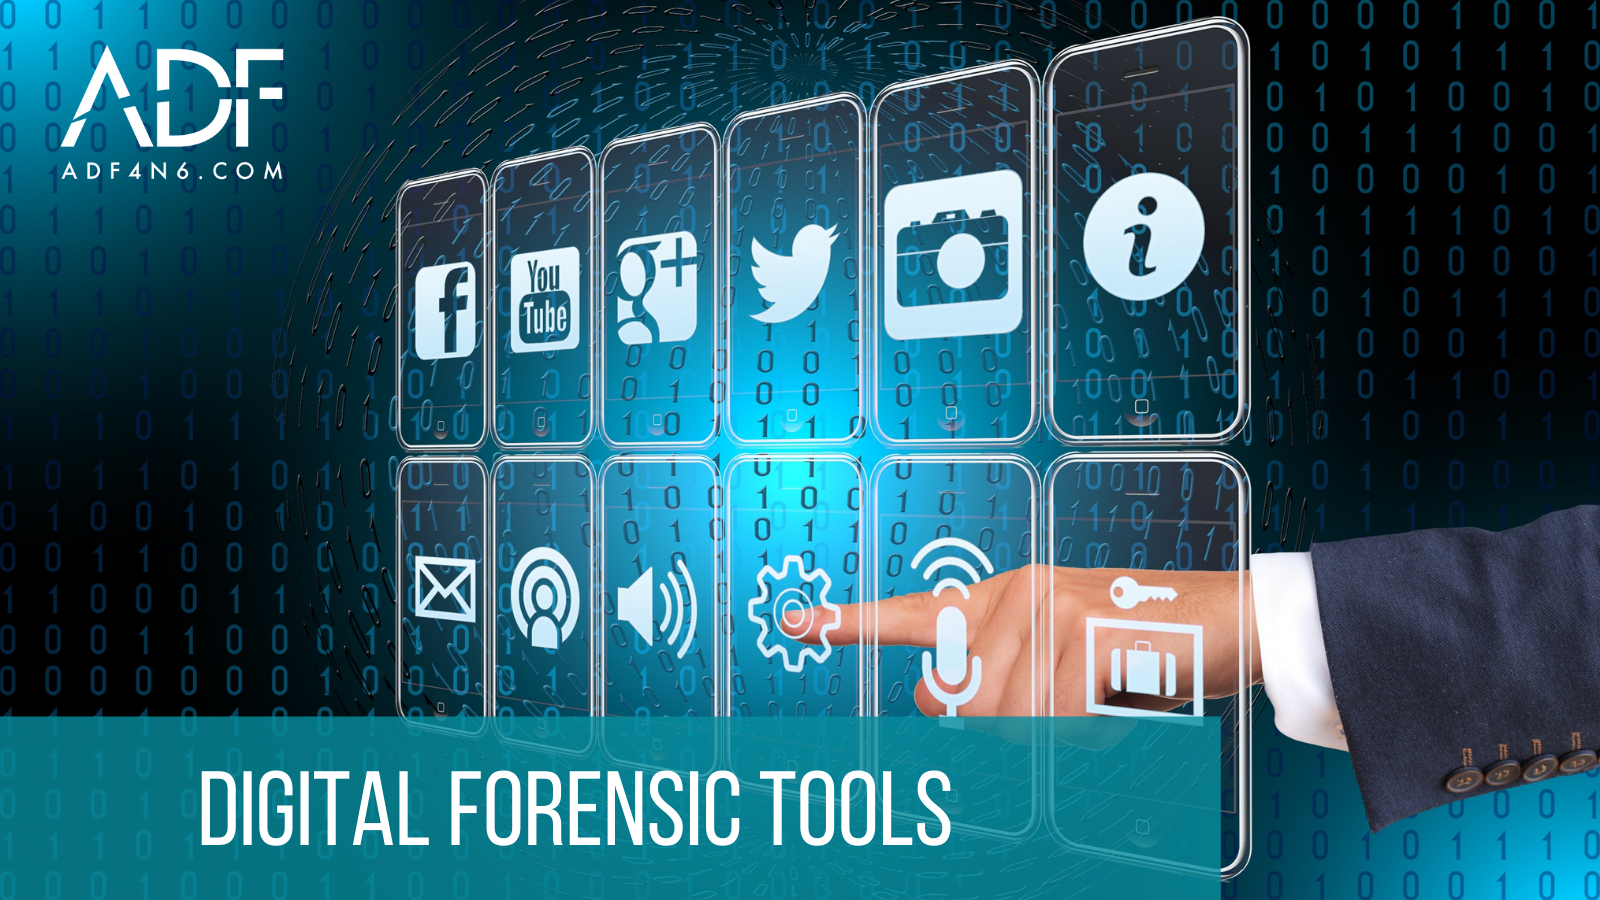 Digital forensic tools interface